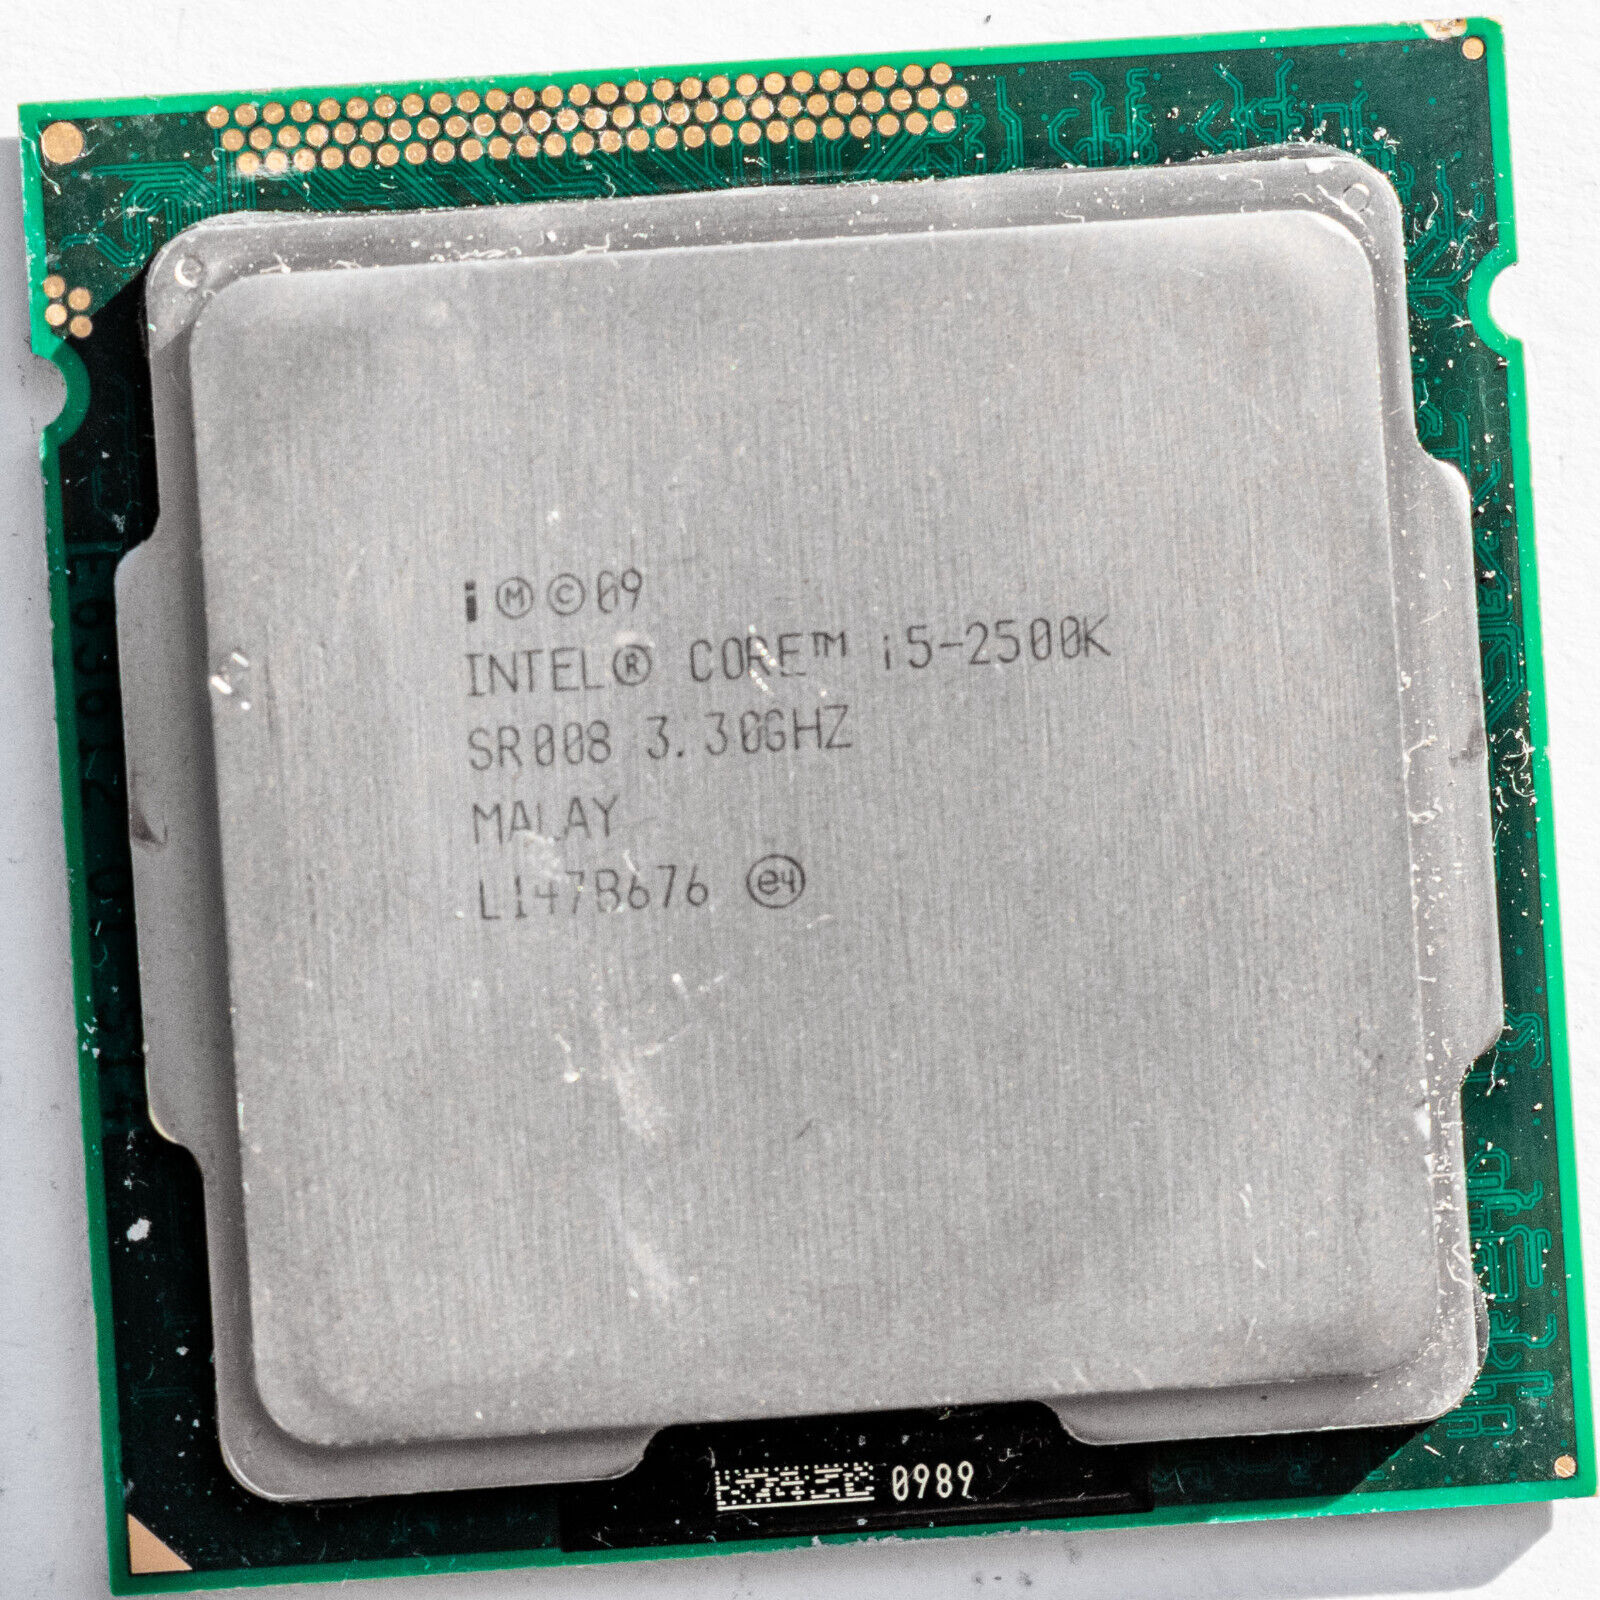 Intel Core i5-2500K SR008 3.3GHz LGA1155 95W 6MB Quad Core Processor